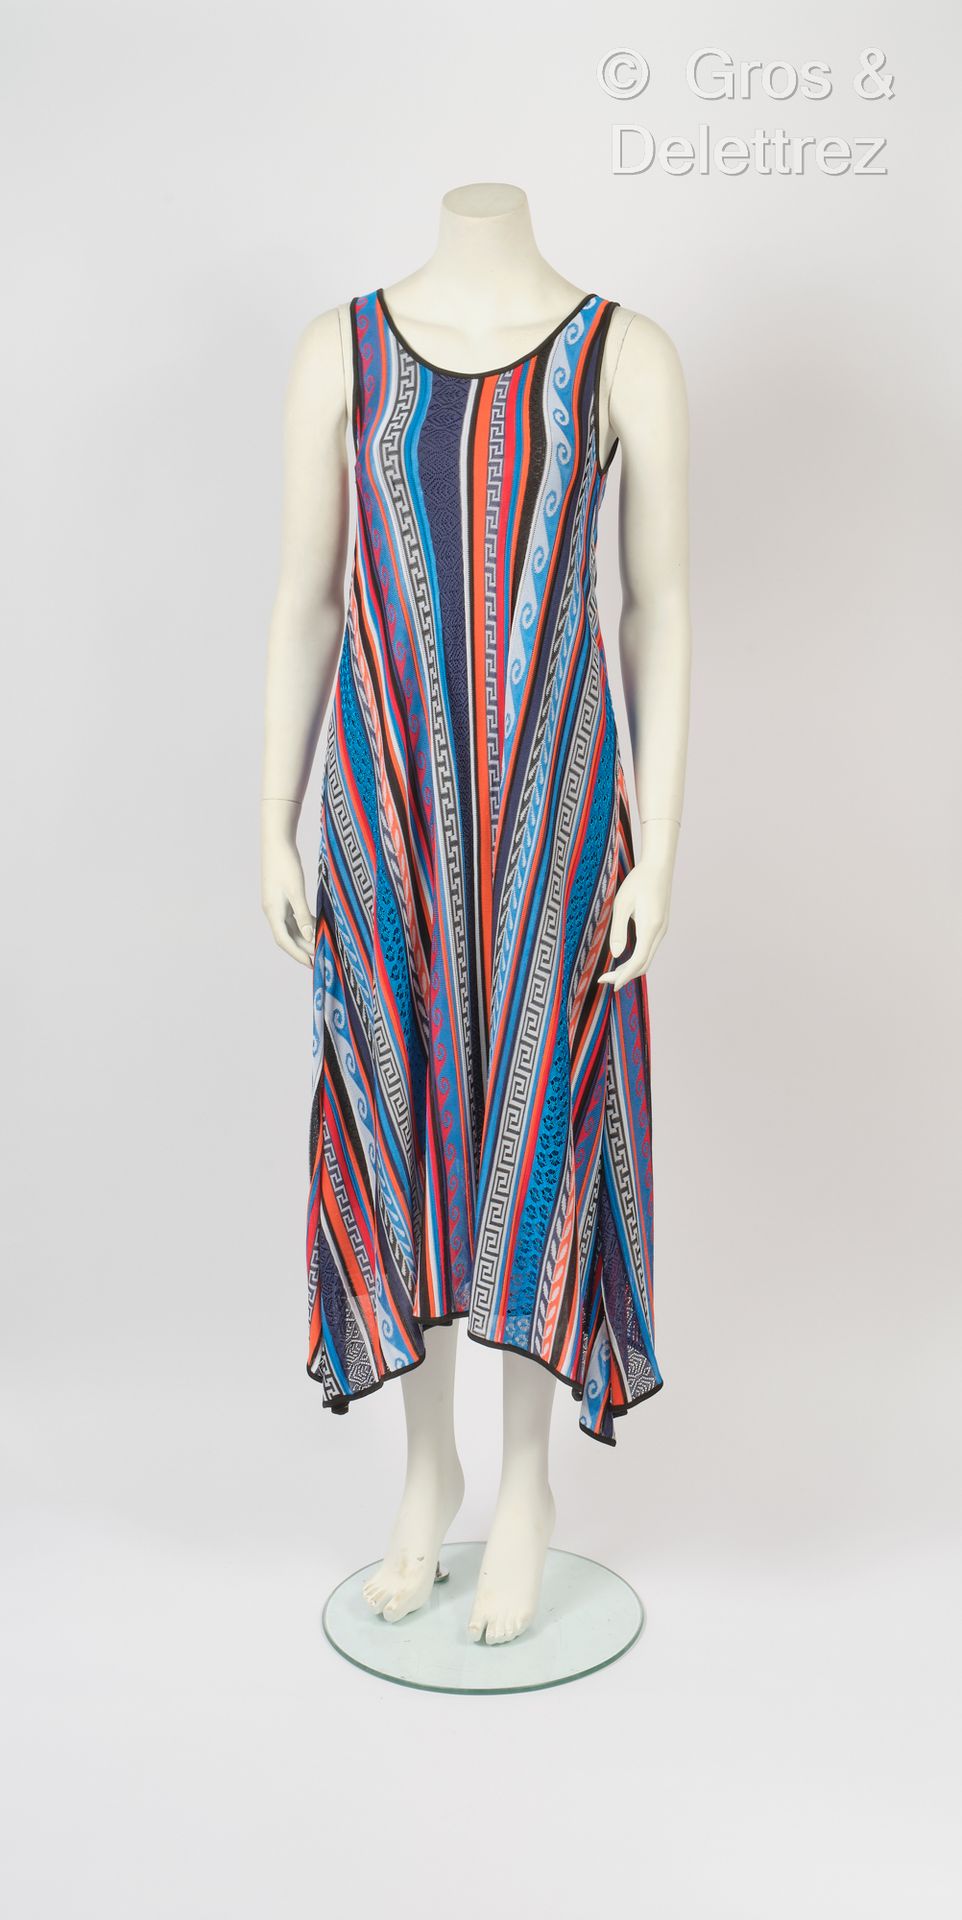 Mary KATRANTZOU Ärmelloses, ausgestelltes Sonnenbadkleid aus mehrfarbig gestreif&hellip;